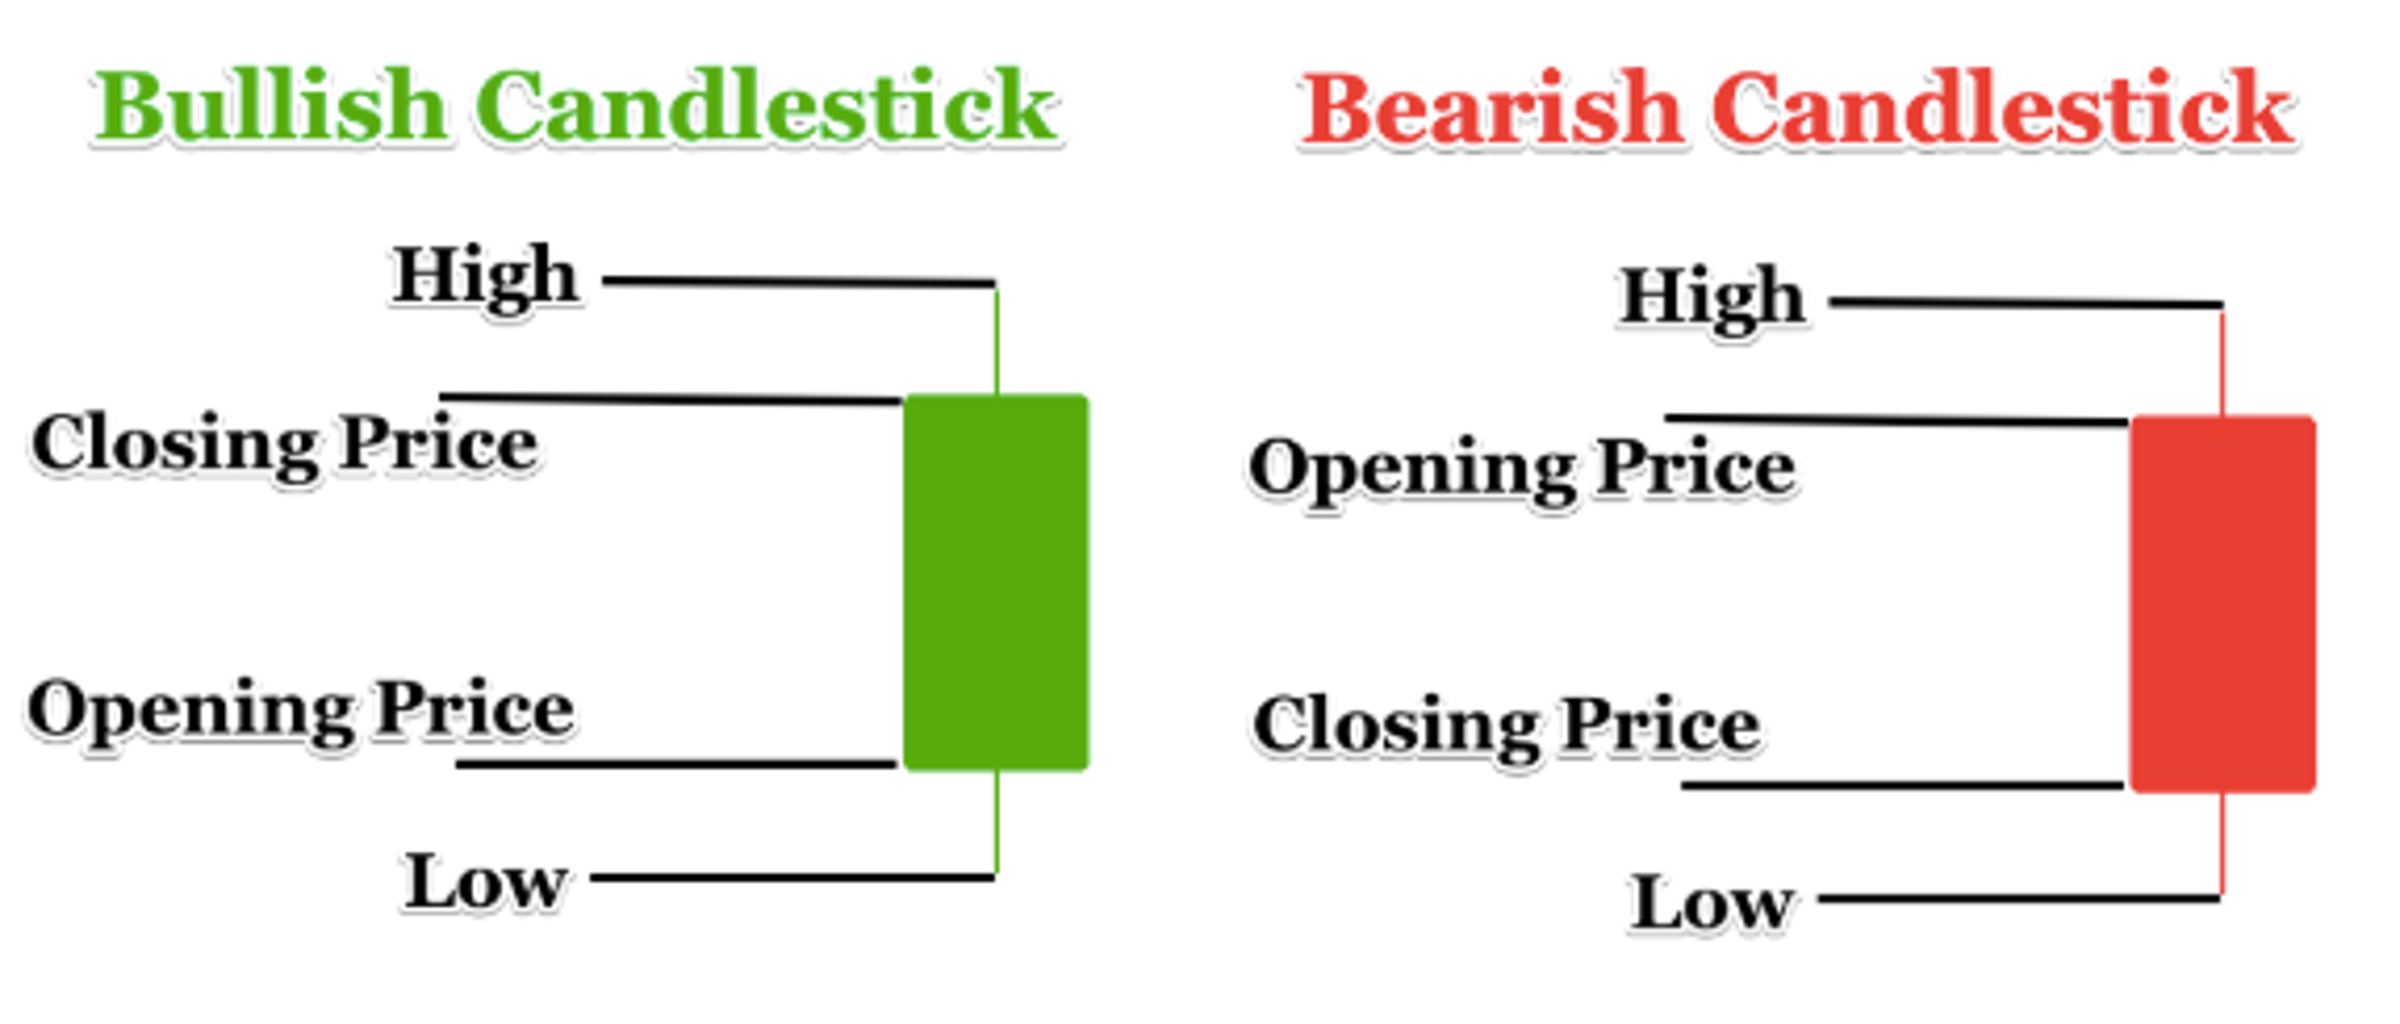 A bullish candlestick versus a bearish candlestick.